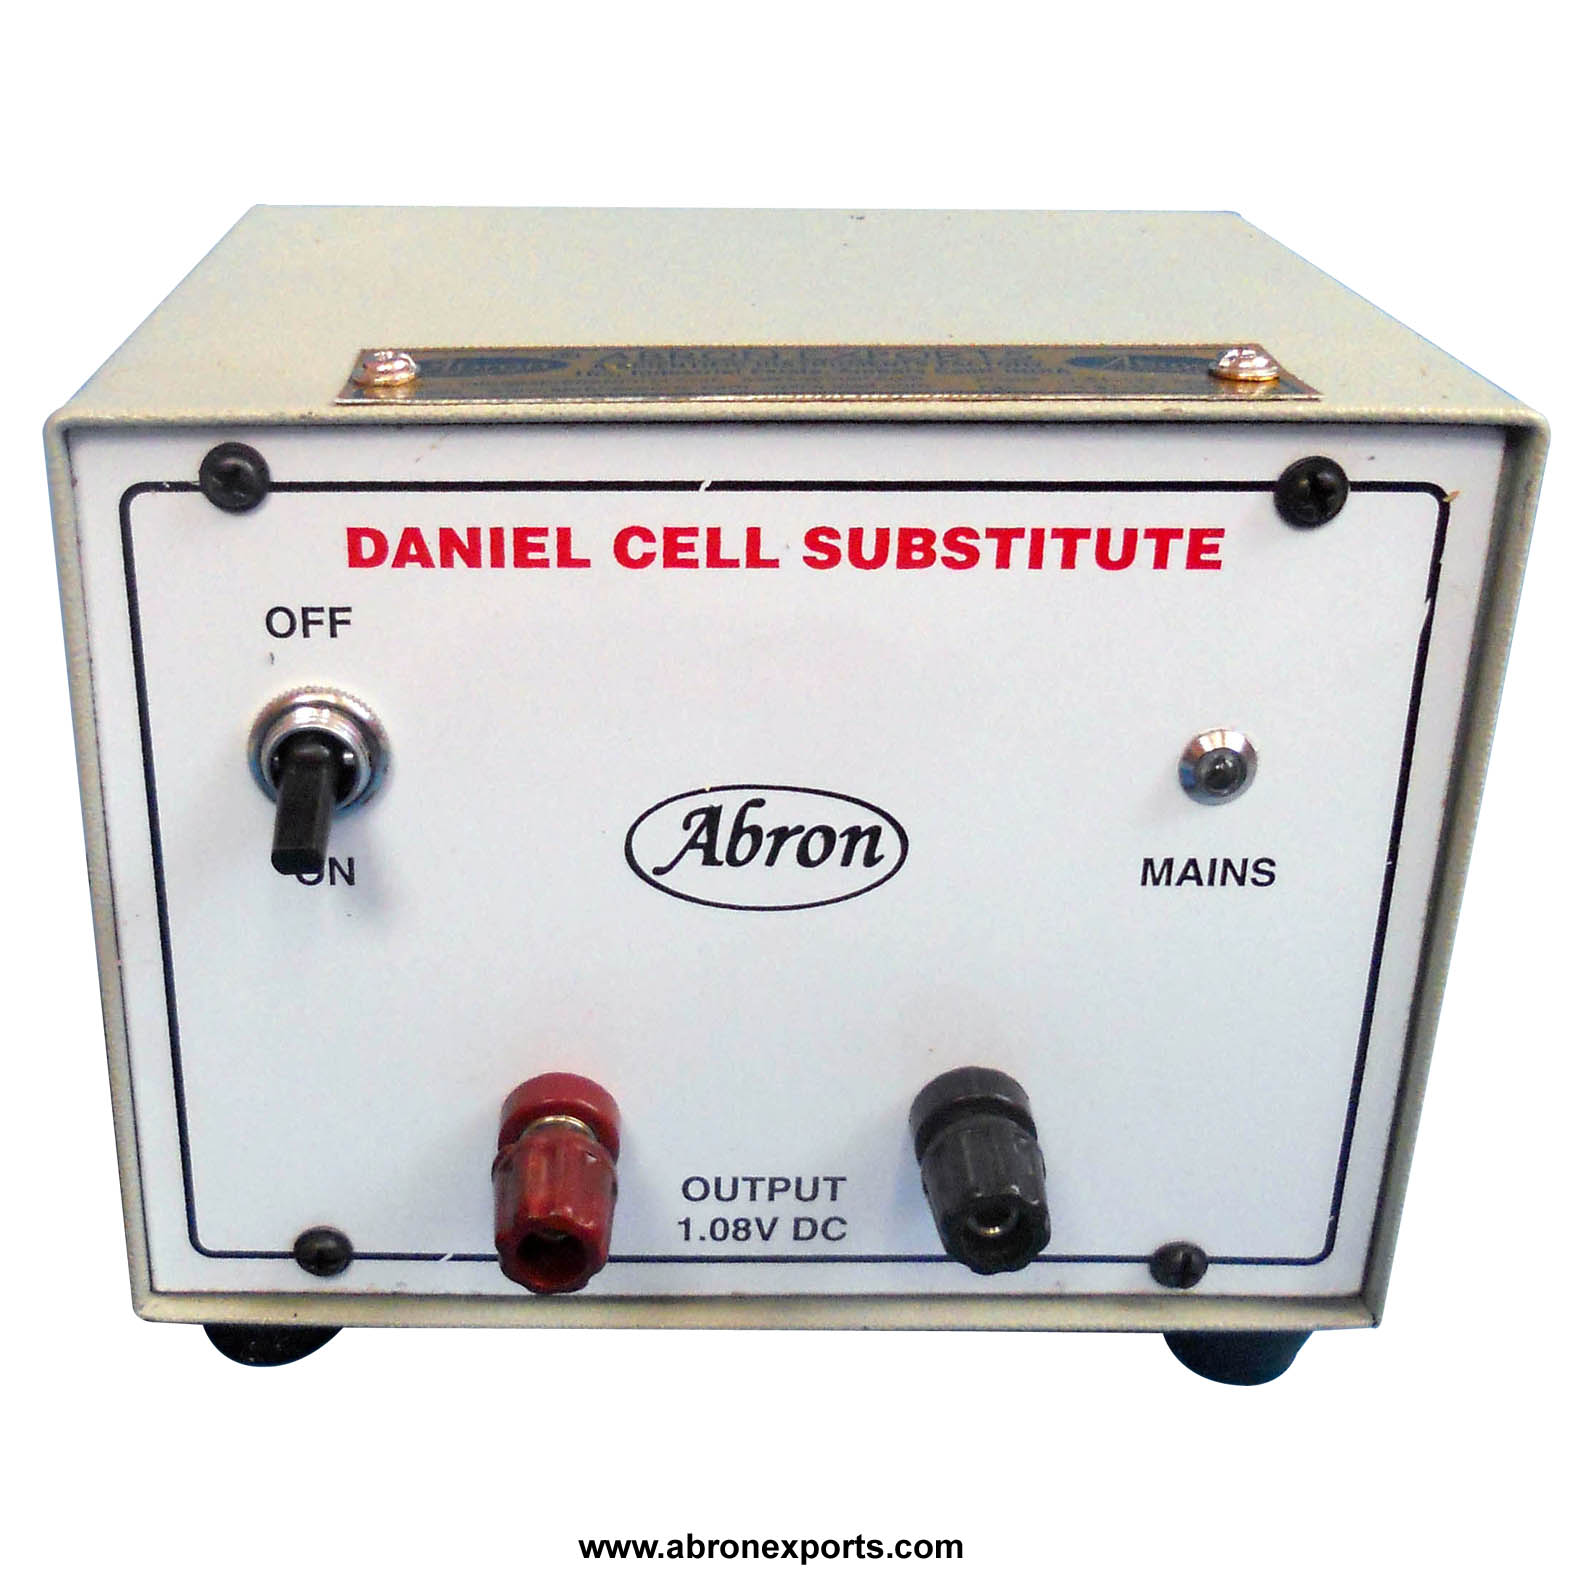 Cell daniel electronic abron AE-1255a